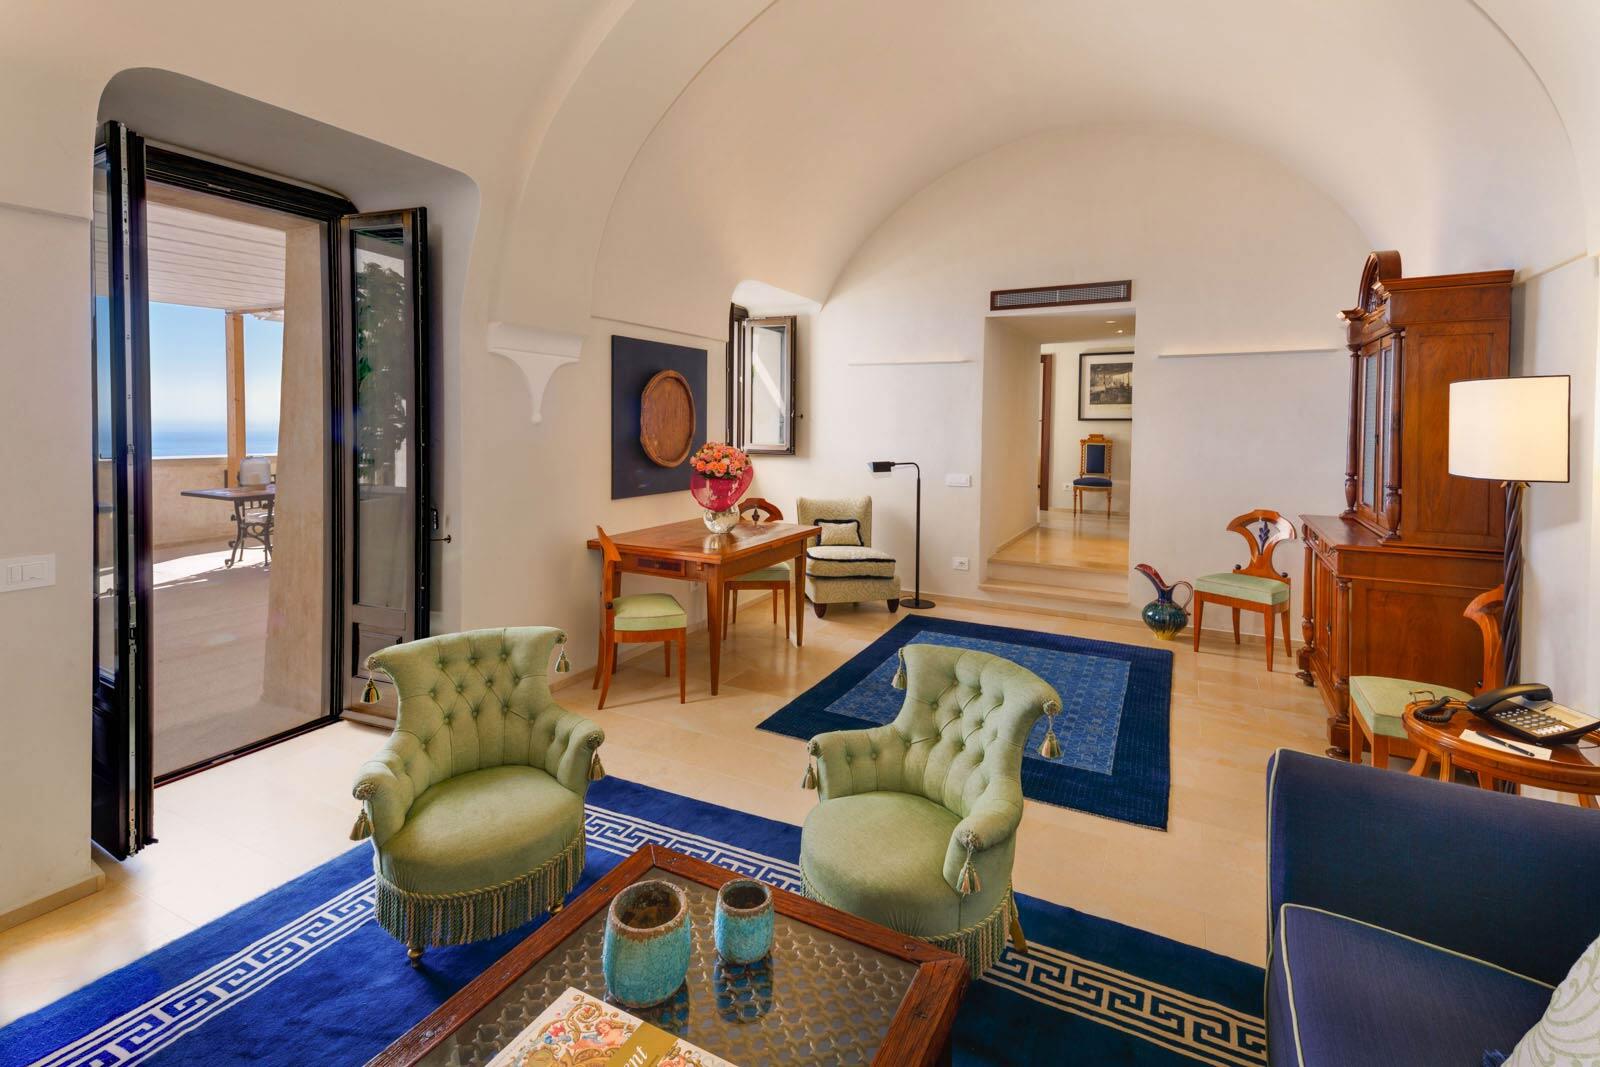 Monastero Santa Rosa Hotel and spa - Amalfi Coast (2)